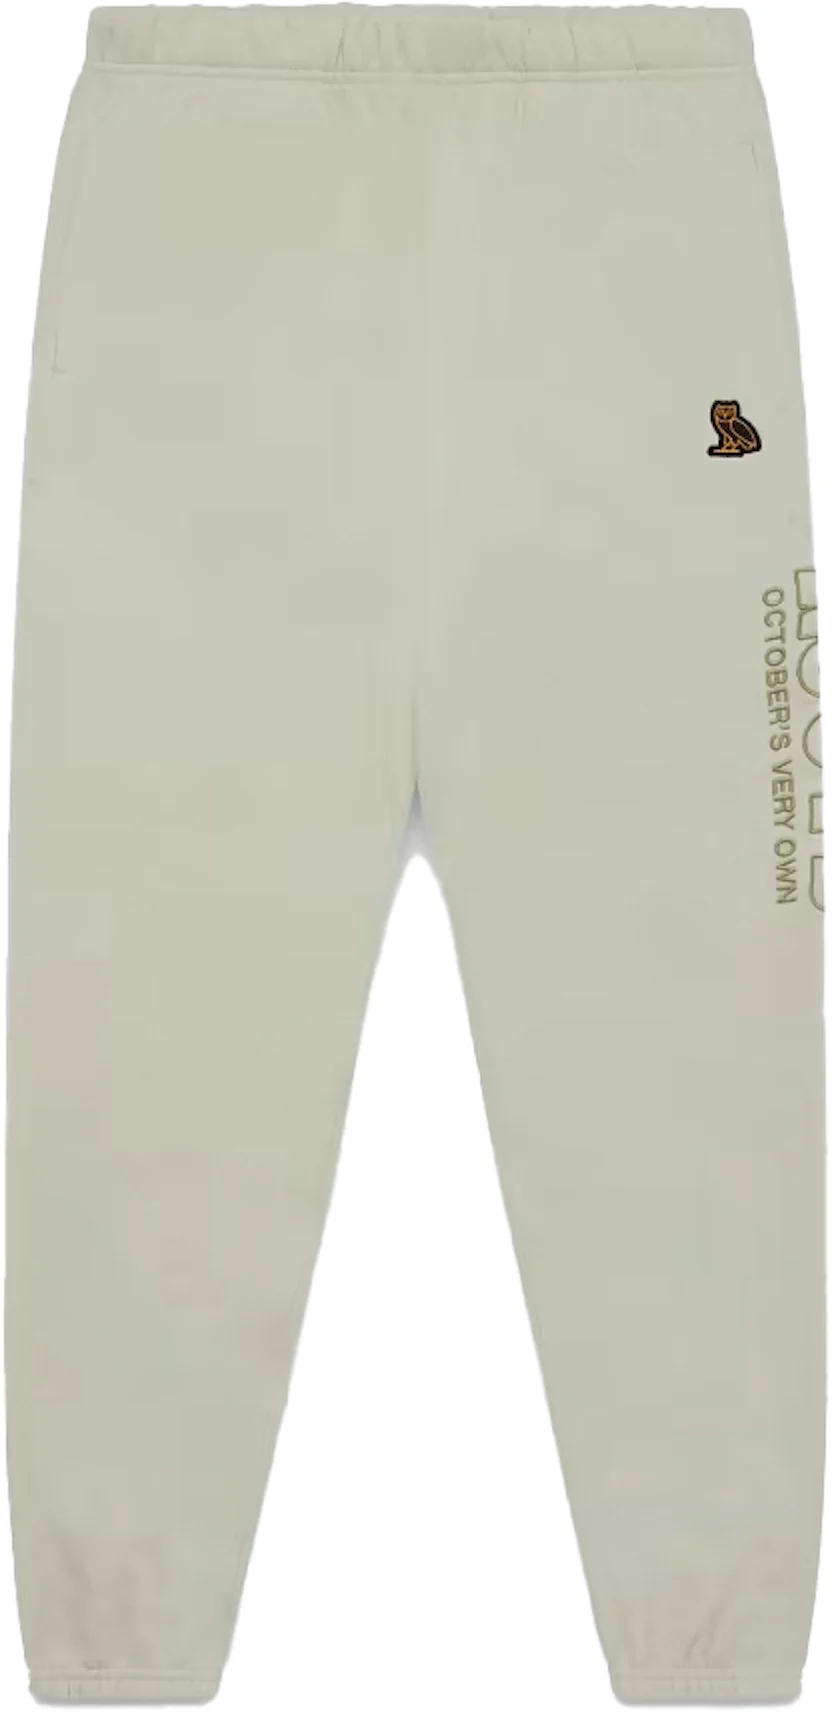 NEW OVO October's Very Own Sweatpants Beige Monogram Cotton